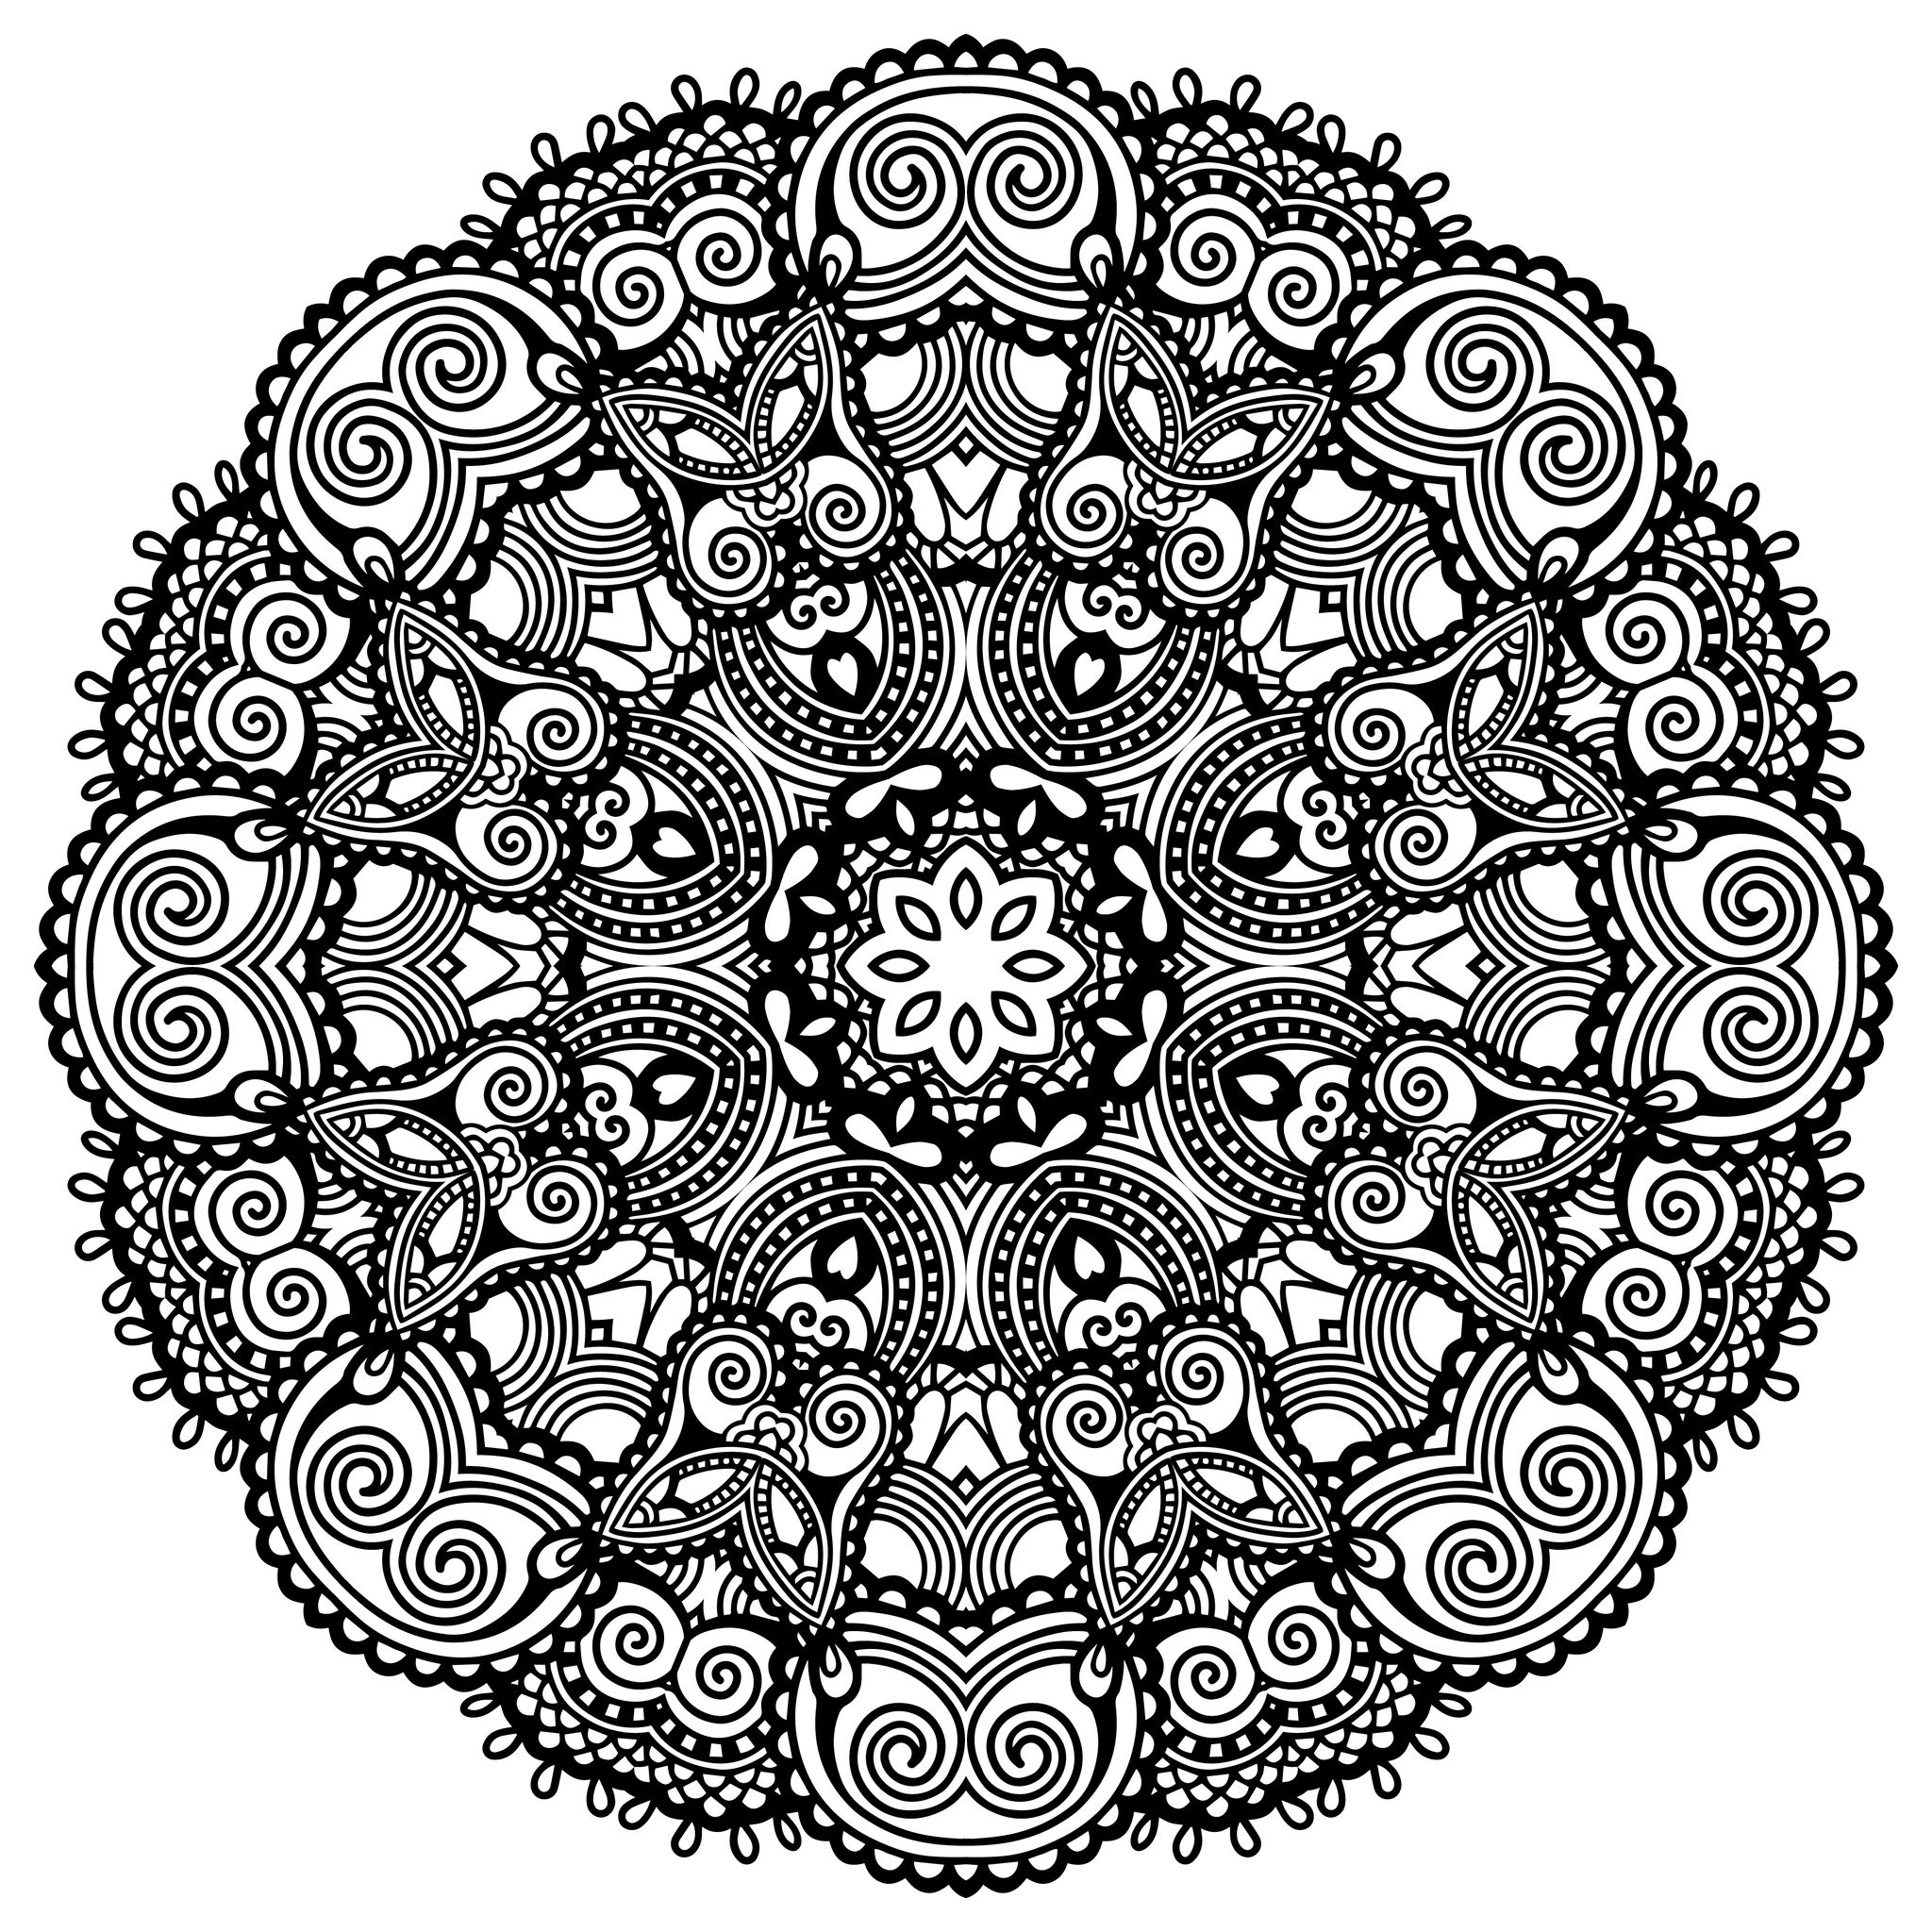 Patterns Black and White Round